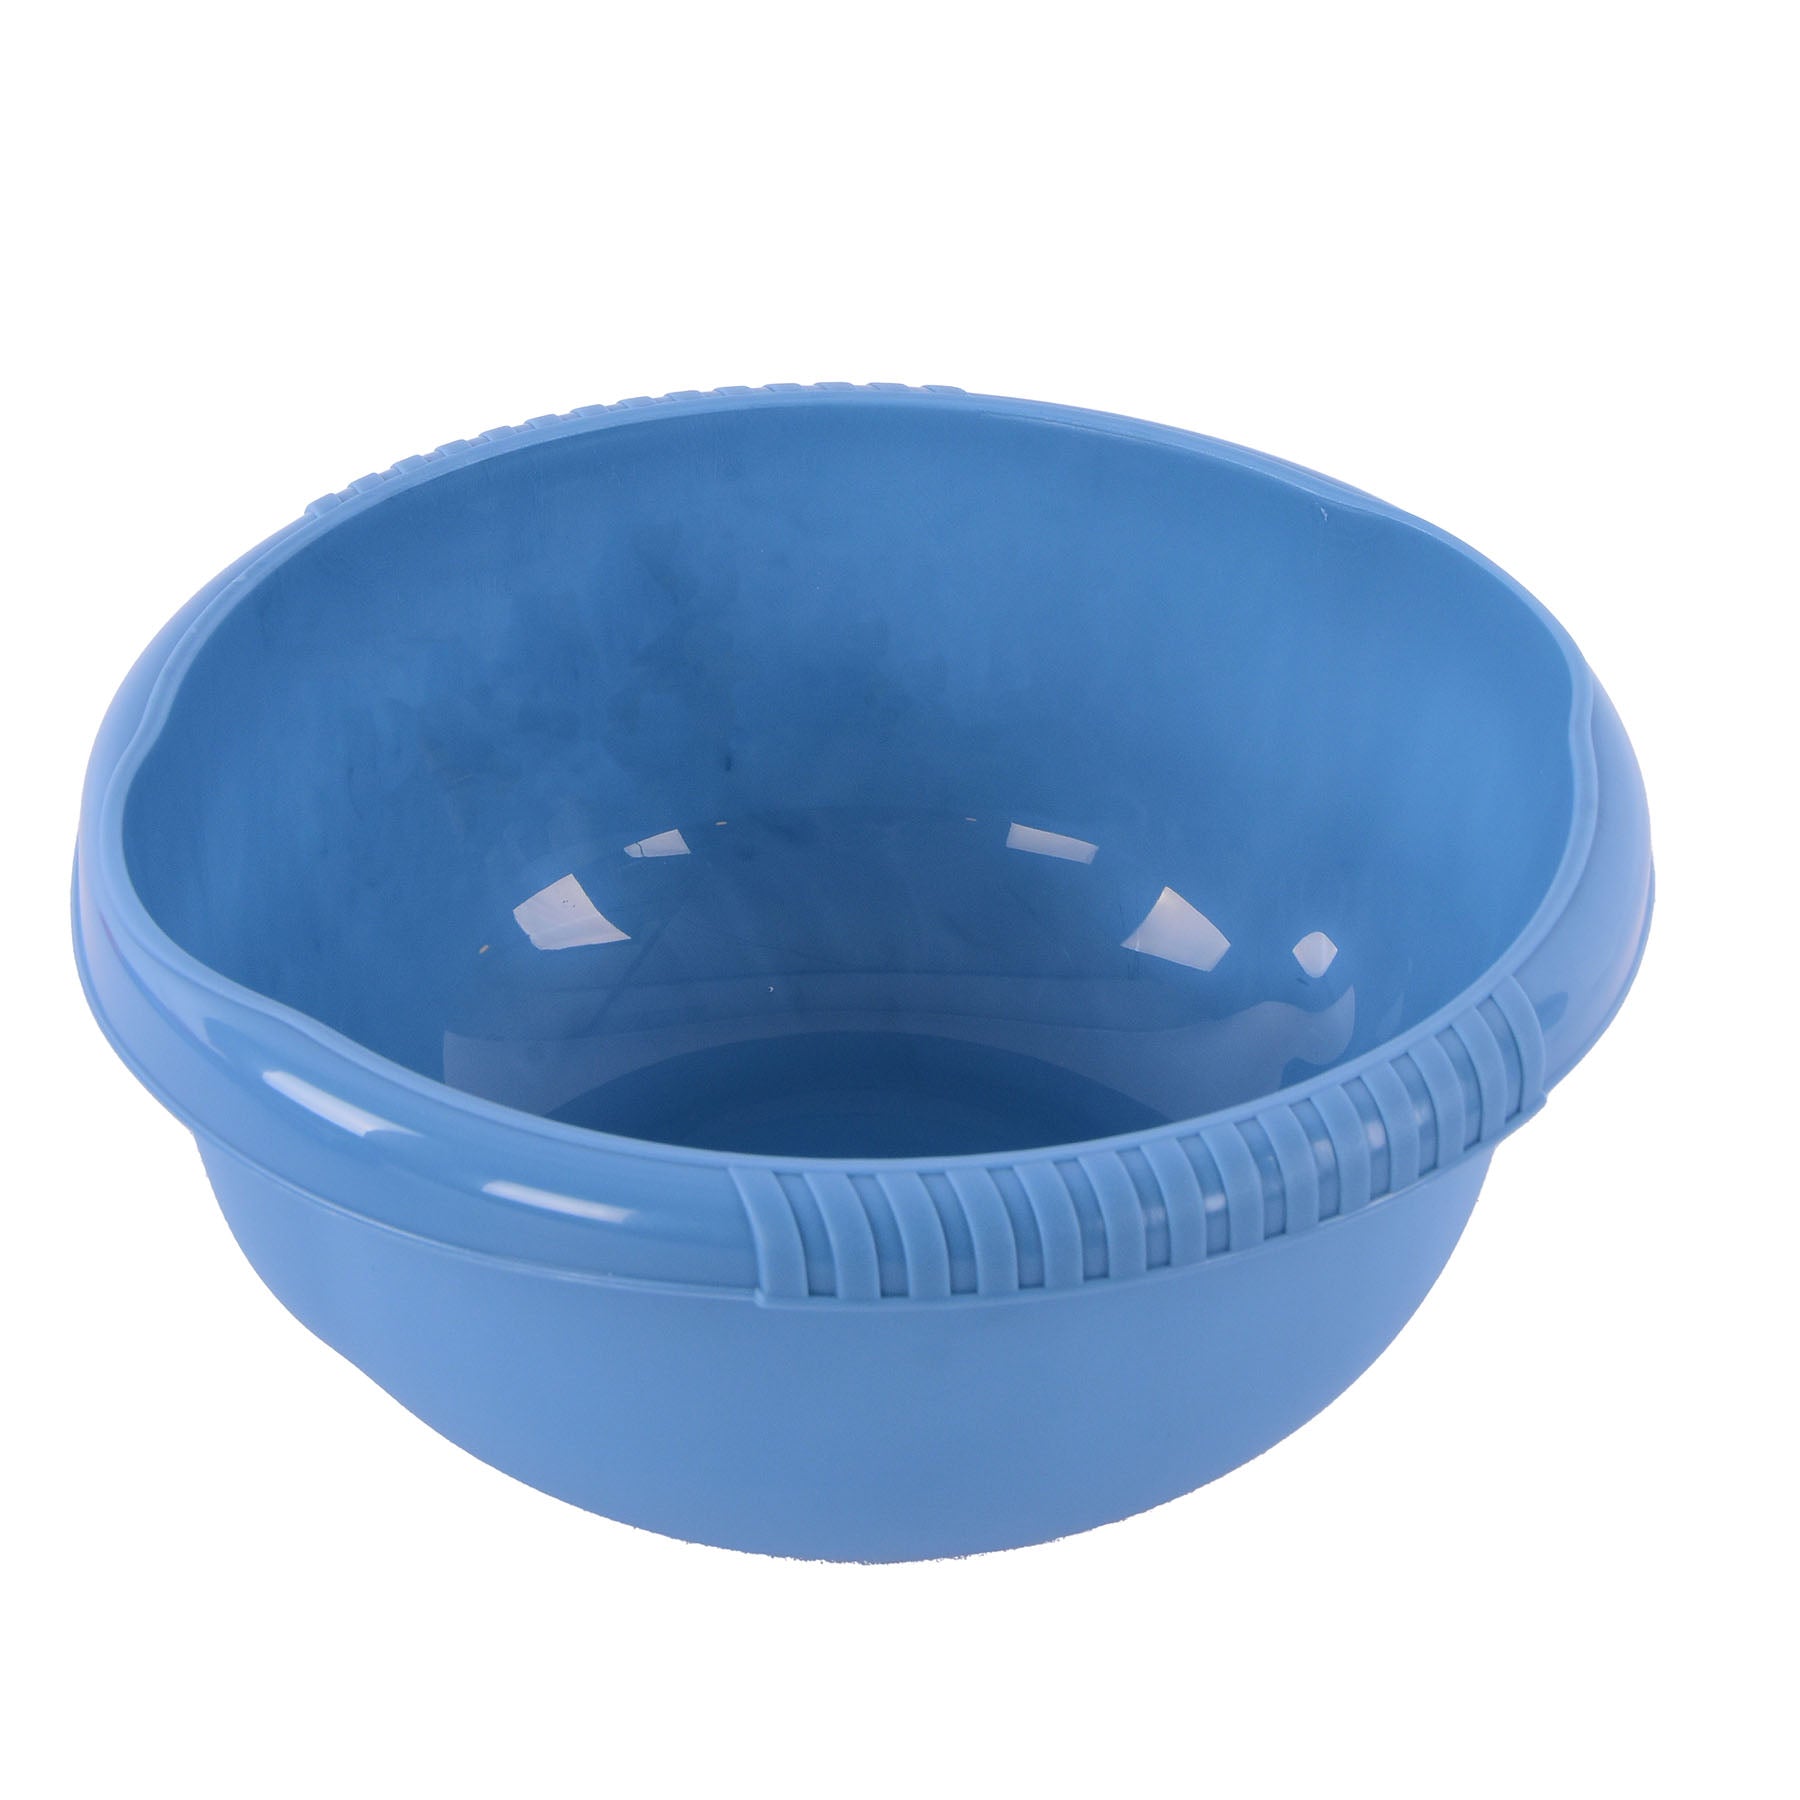 Round plastic basinSize: 24 x H10.5 cm